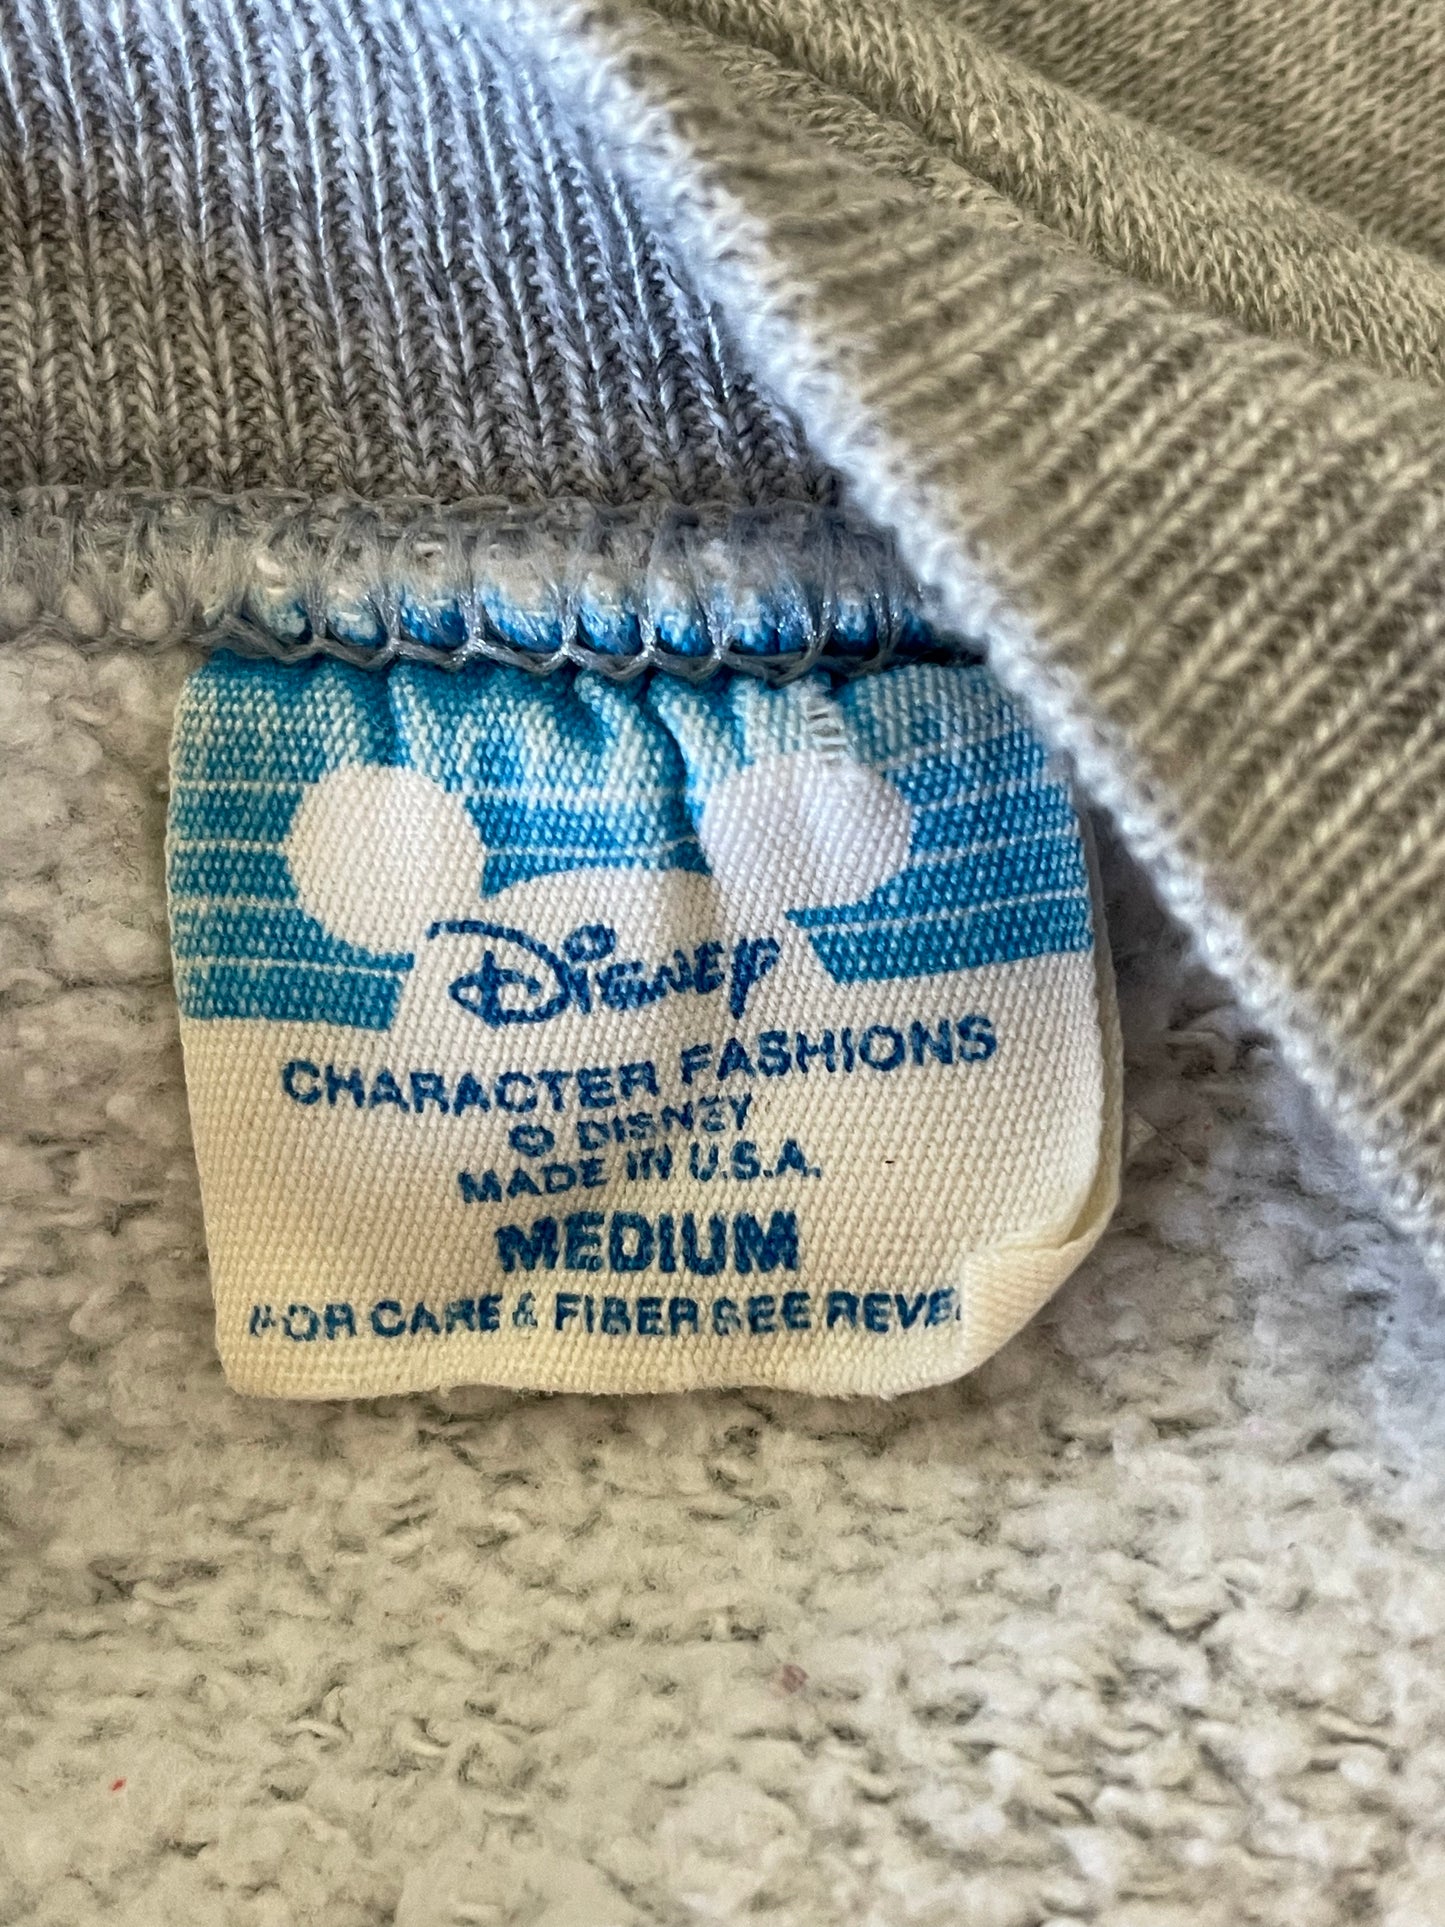 80s Mickey Mouse Sweatshirt